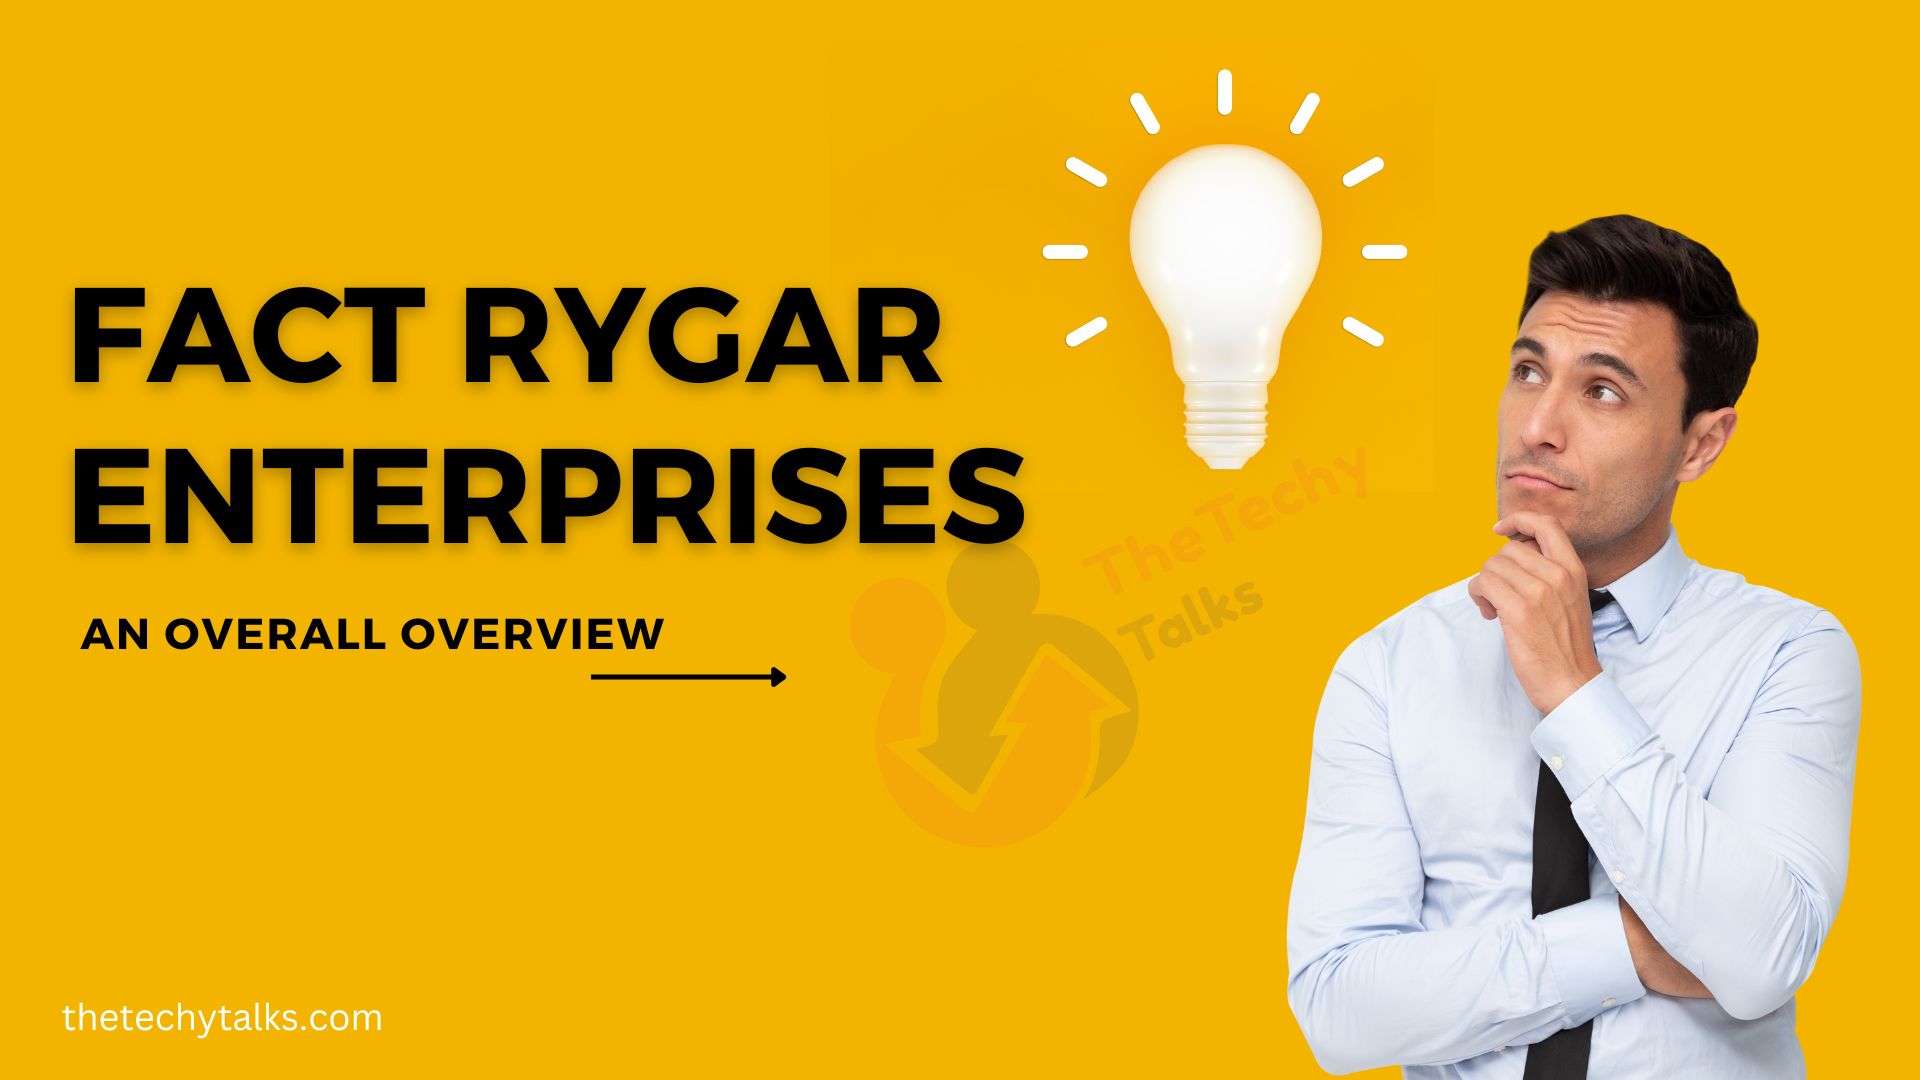 Interesting Fact Rygar Enterprises